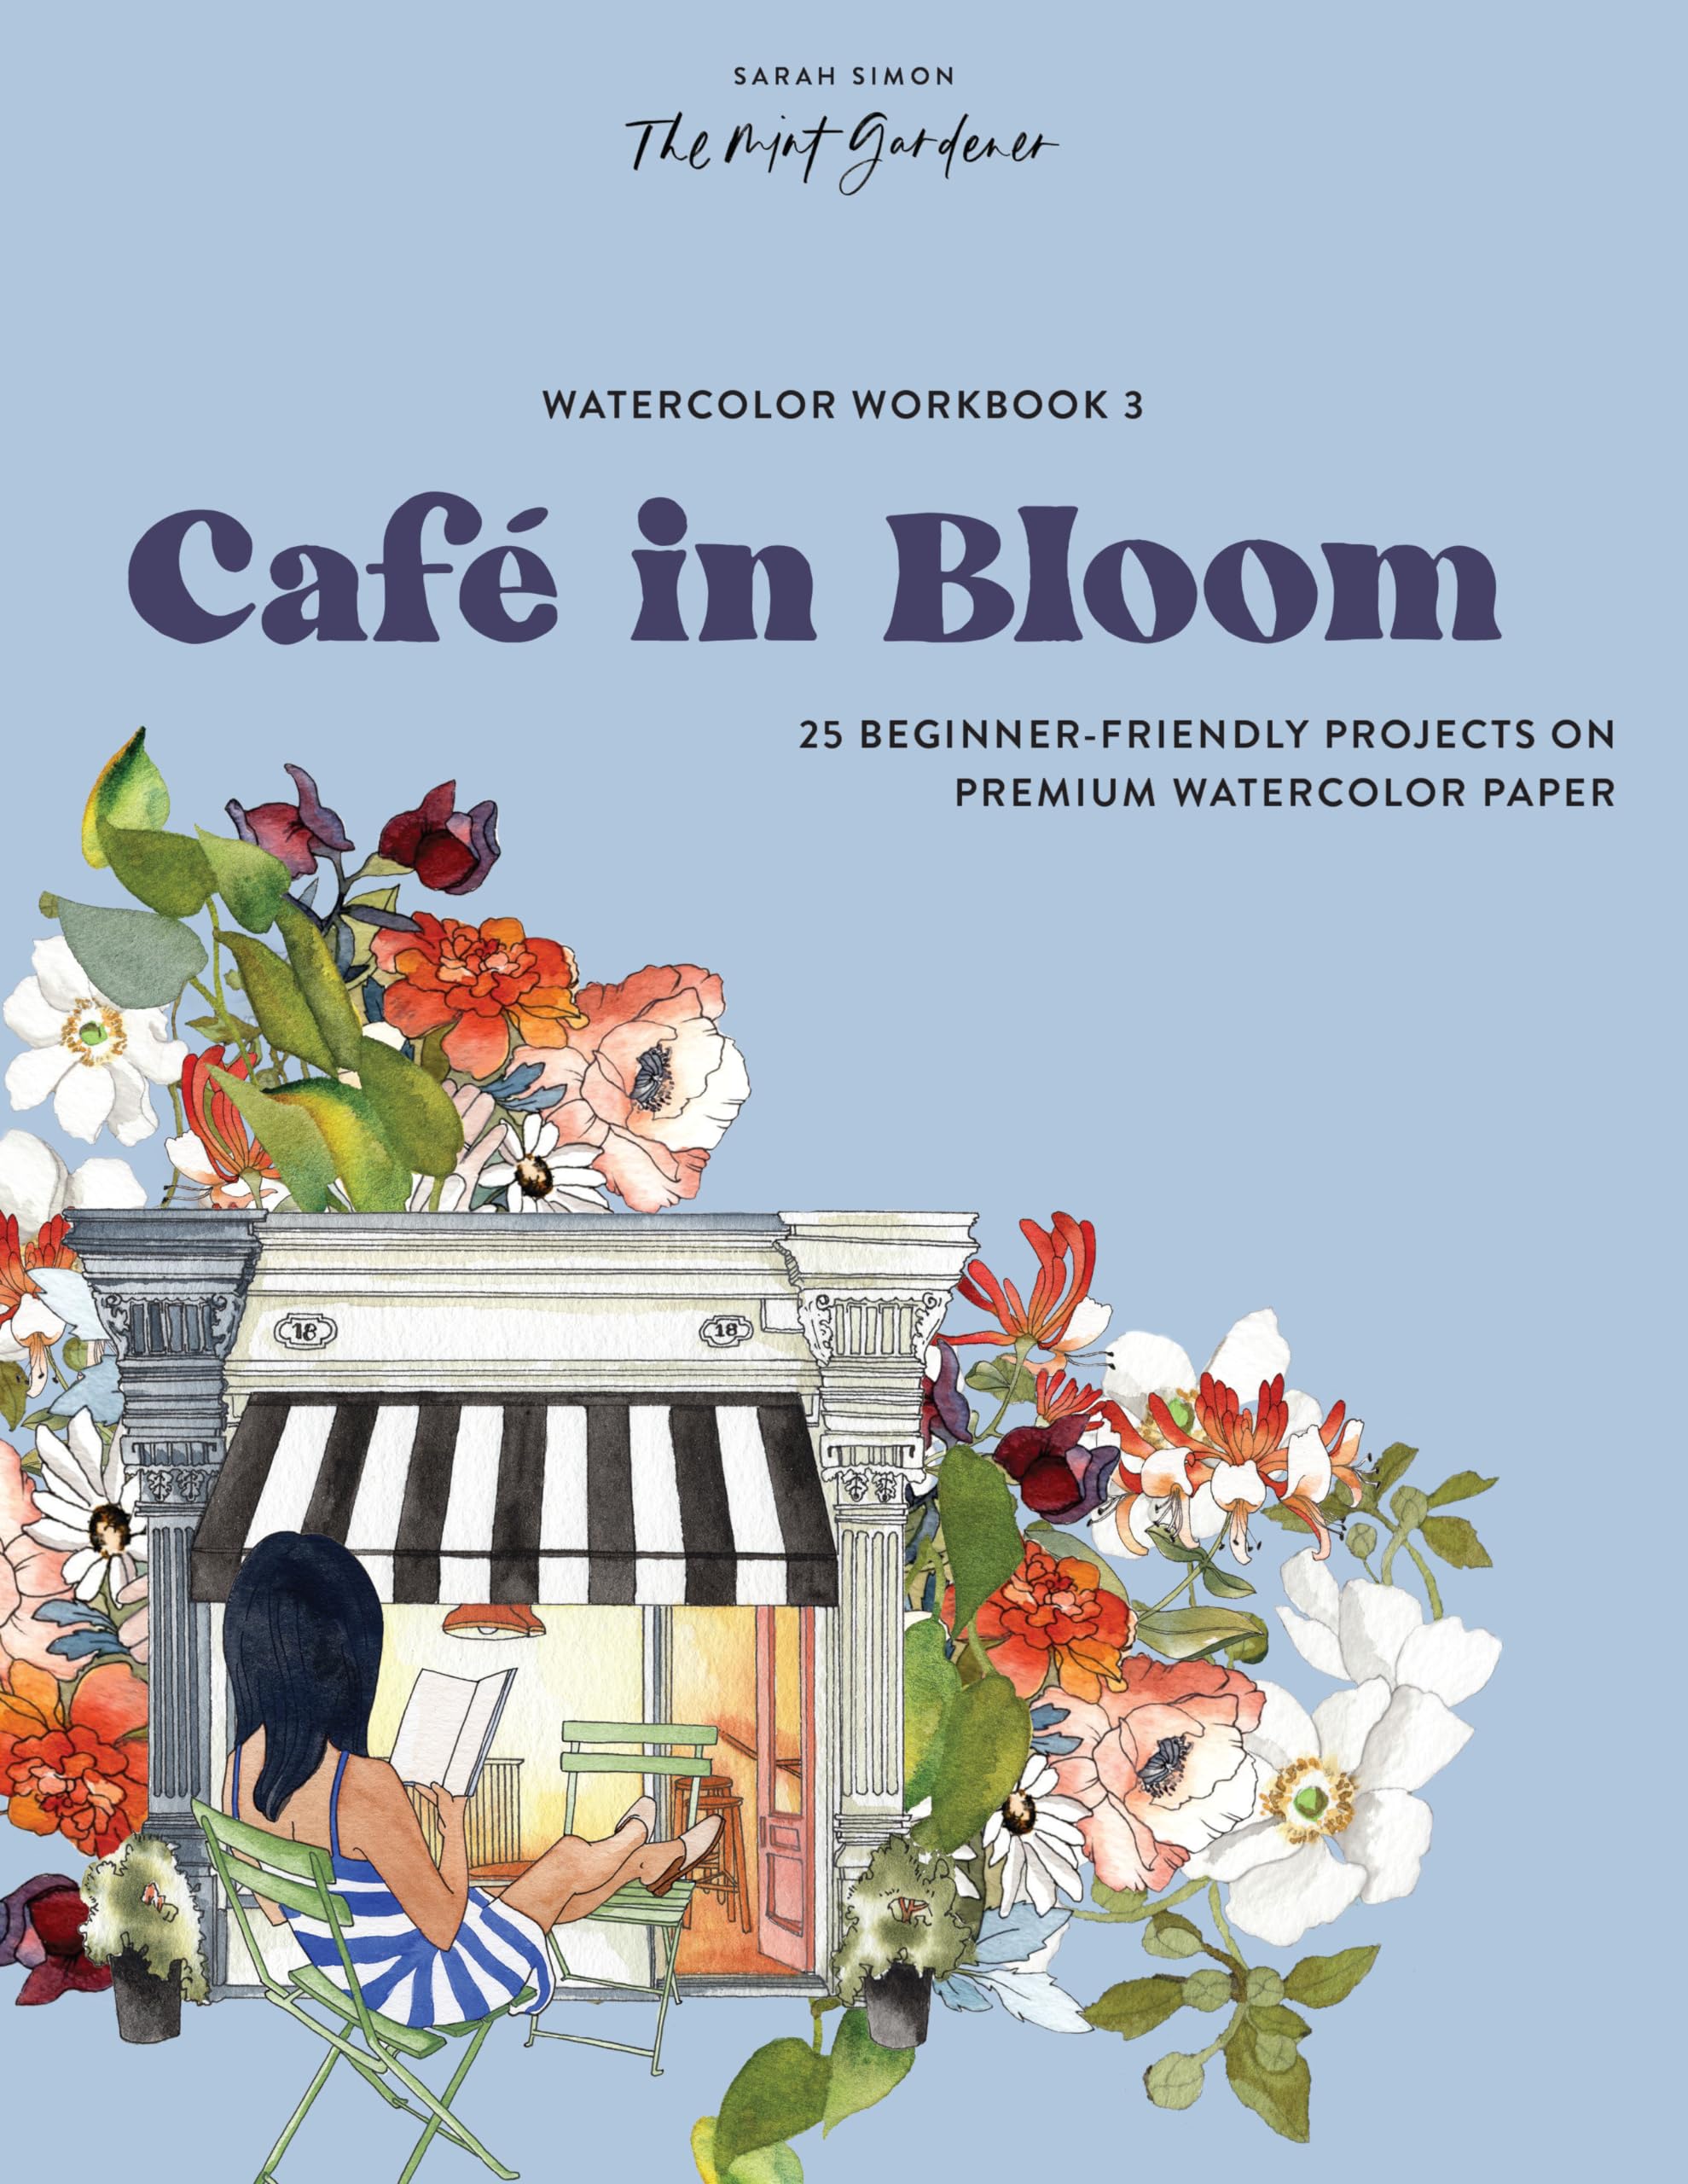 Watercolor Workbook: Café in Bloom: 25 Beginner-Friendly Projects on Premium Watercolor Paper (Watercolor Workbook Series)